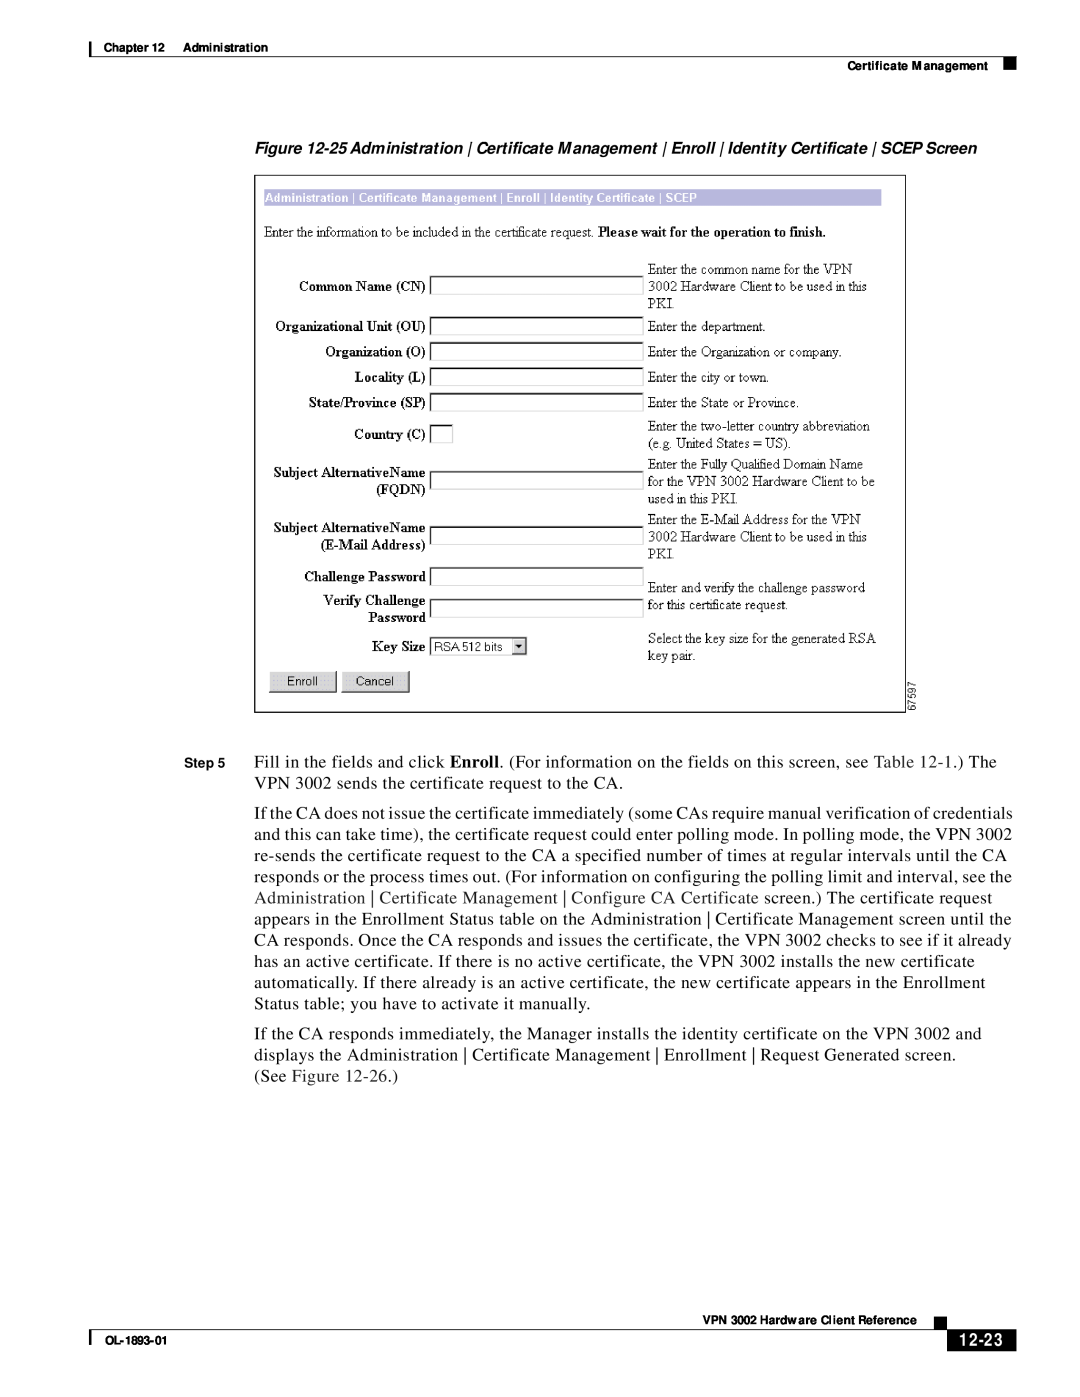 Cisco Systems VPN 3002 manual 12-23 